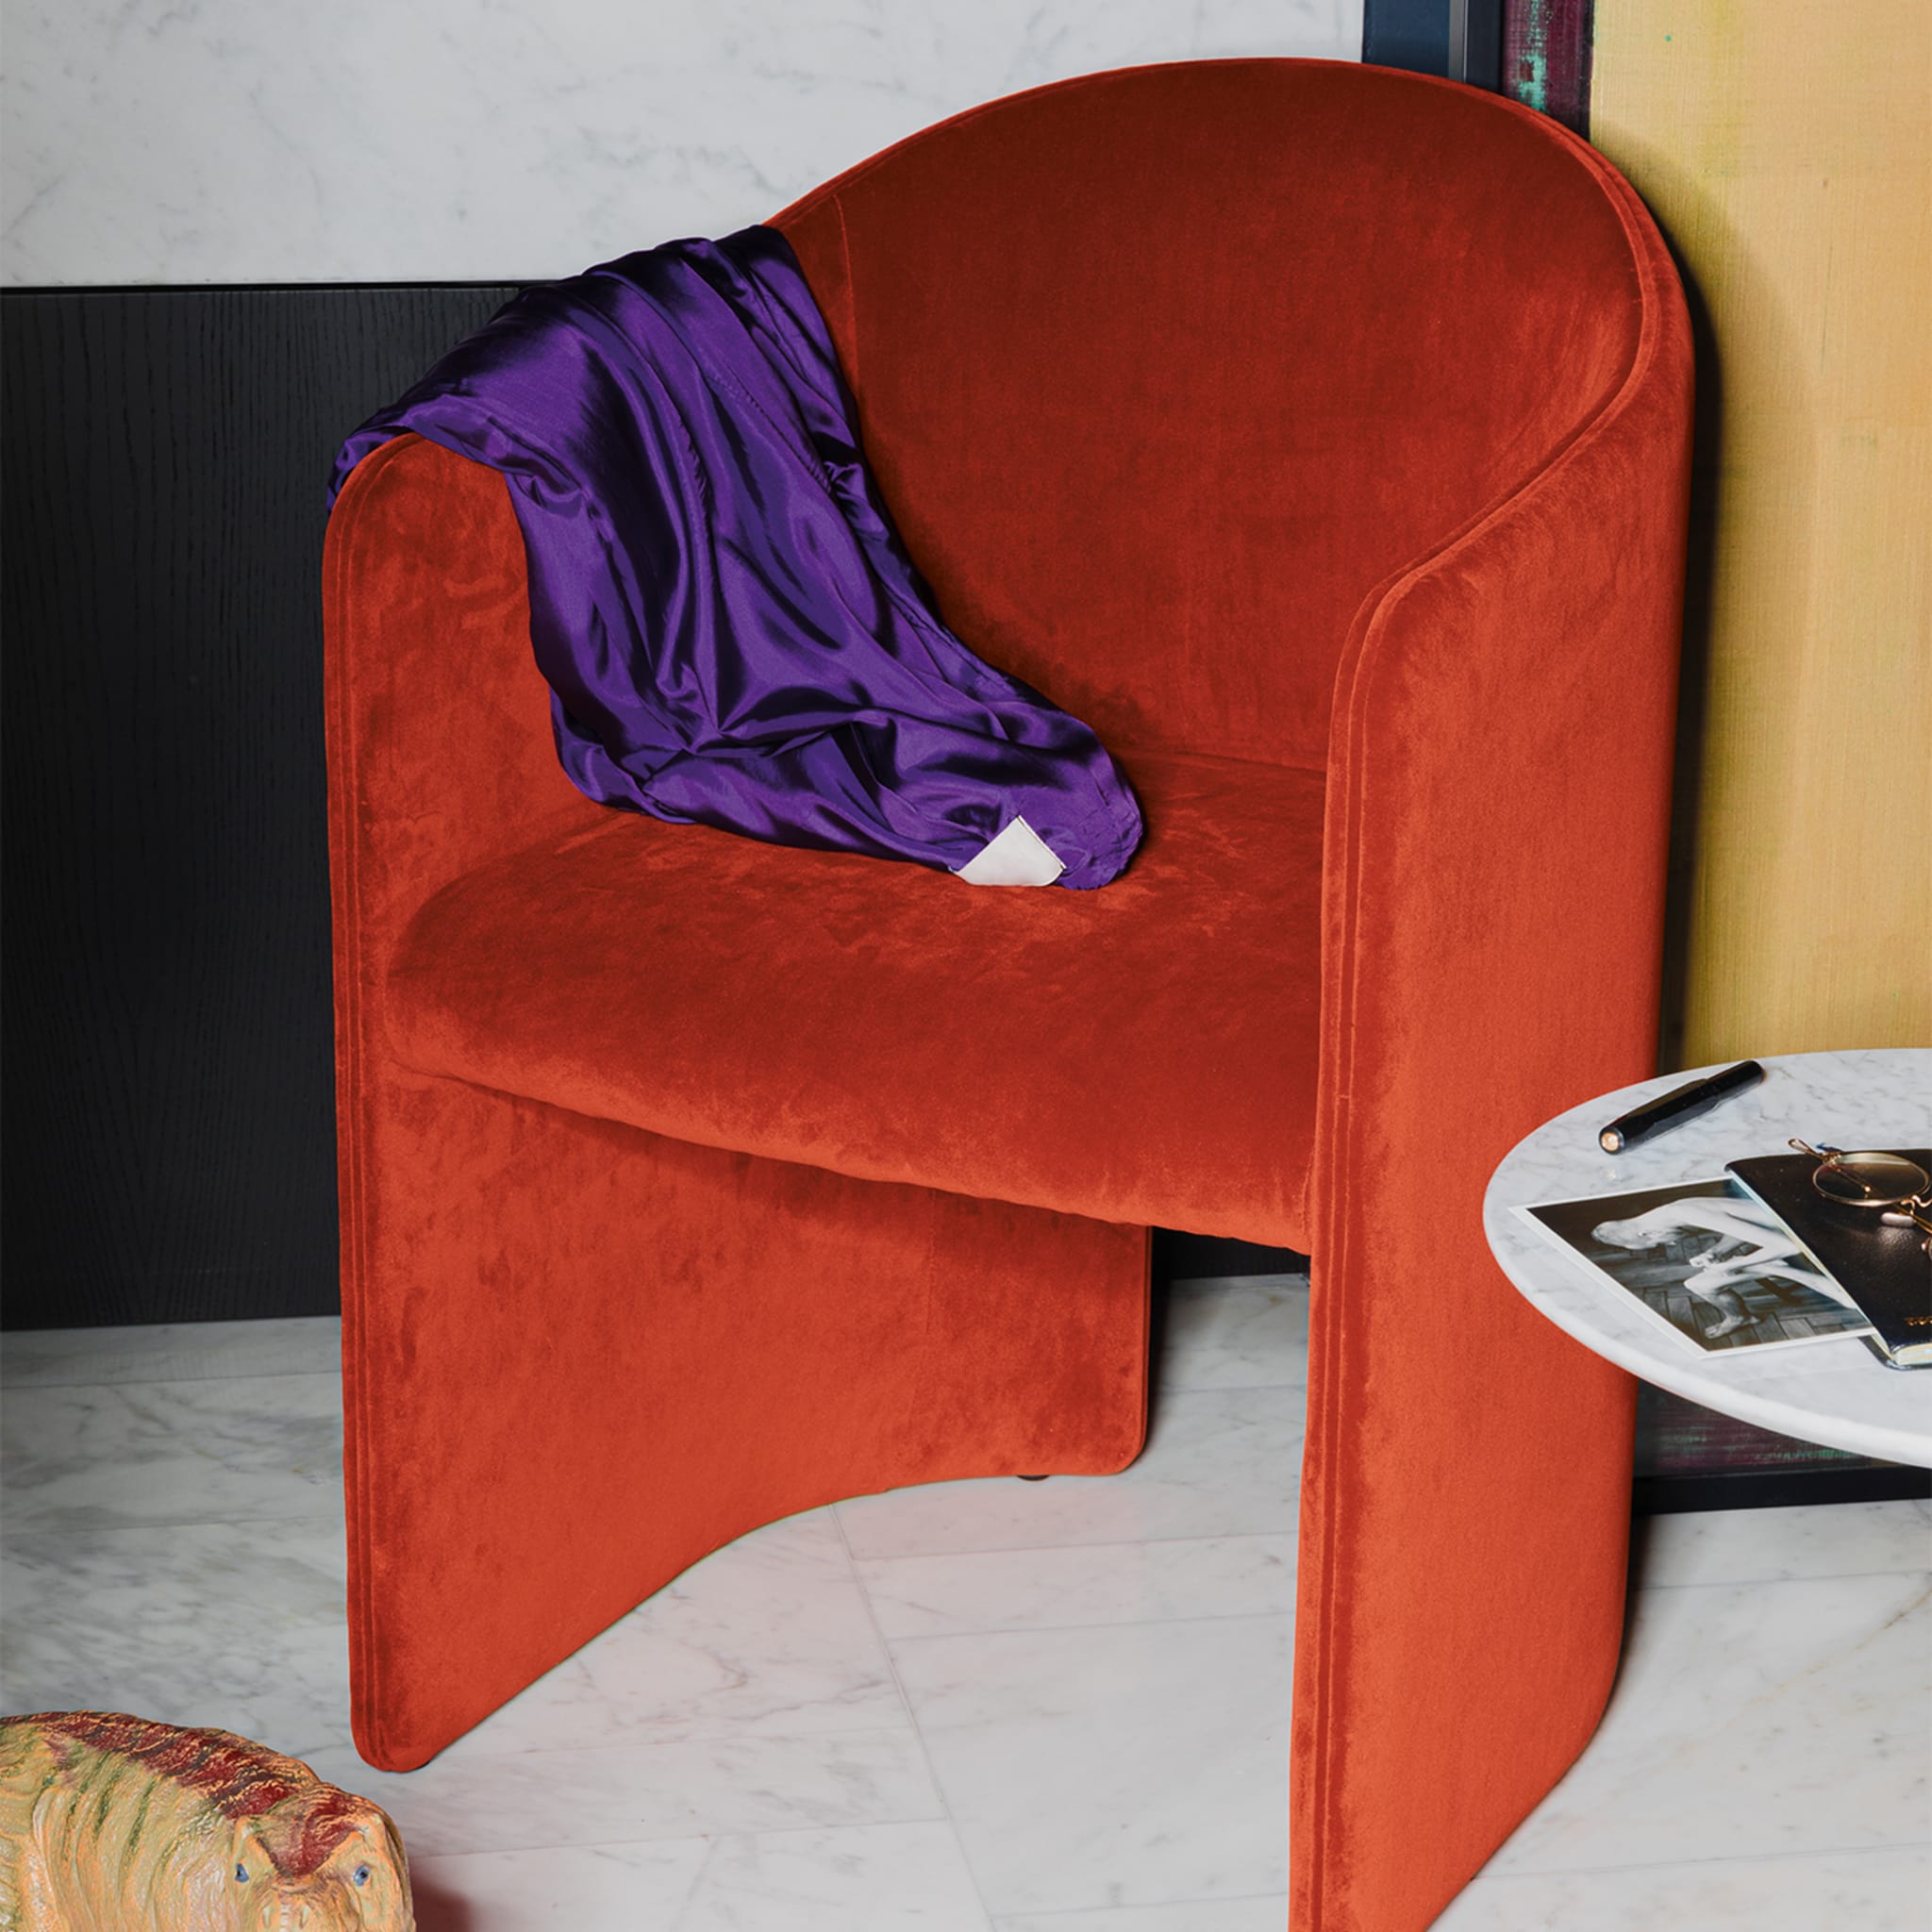 Brera Red Chair by Dainelli Studio  - Alternative view 1